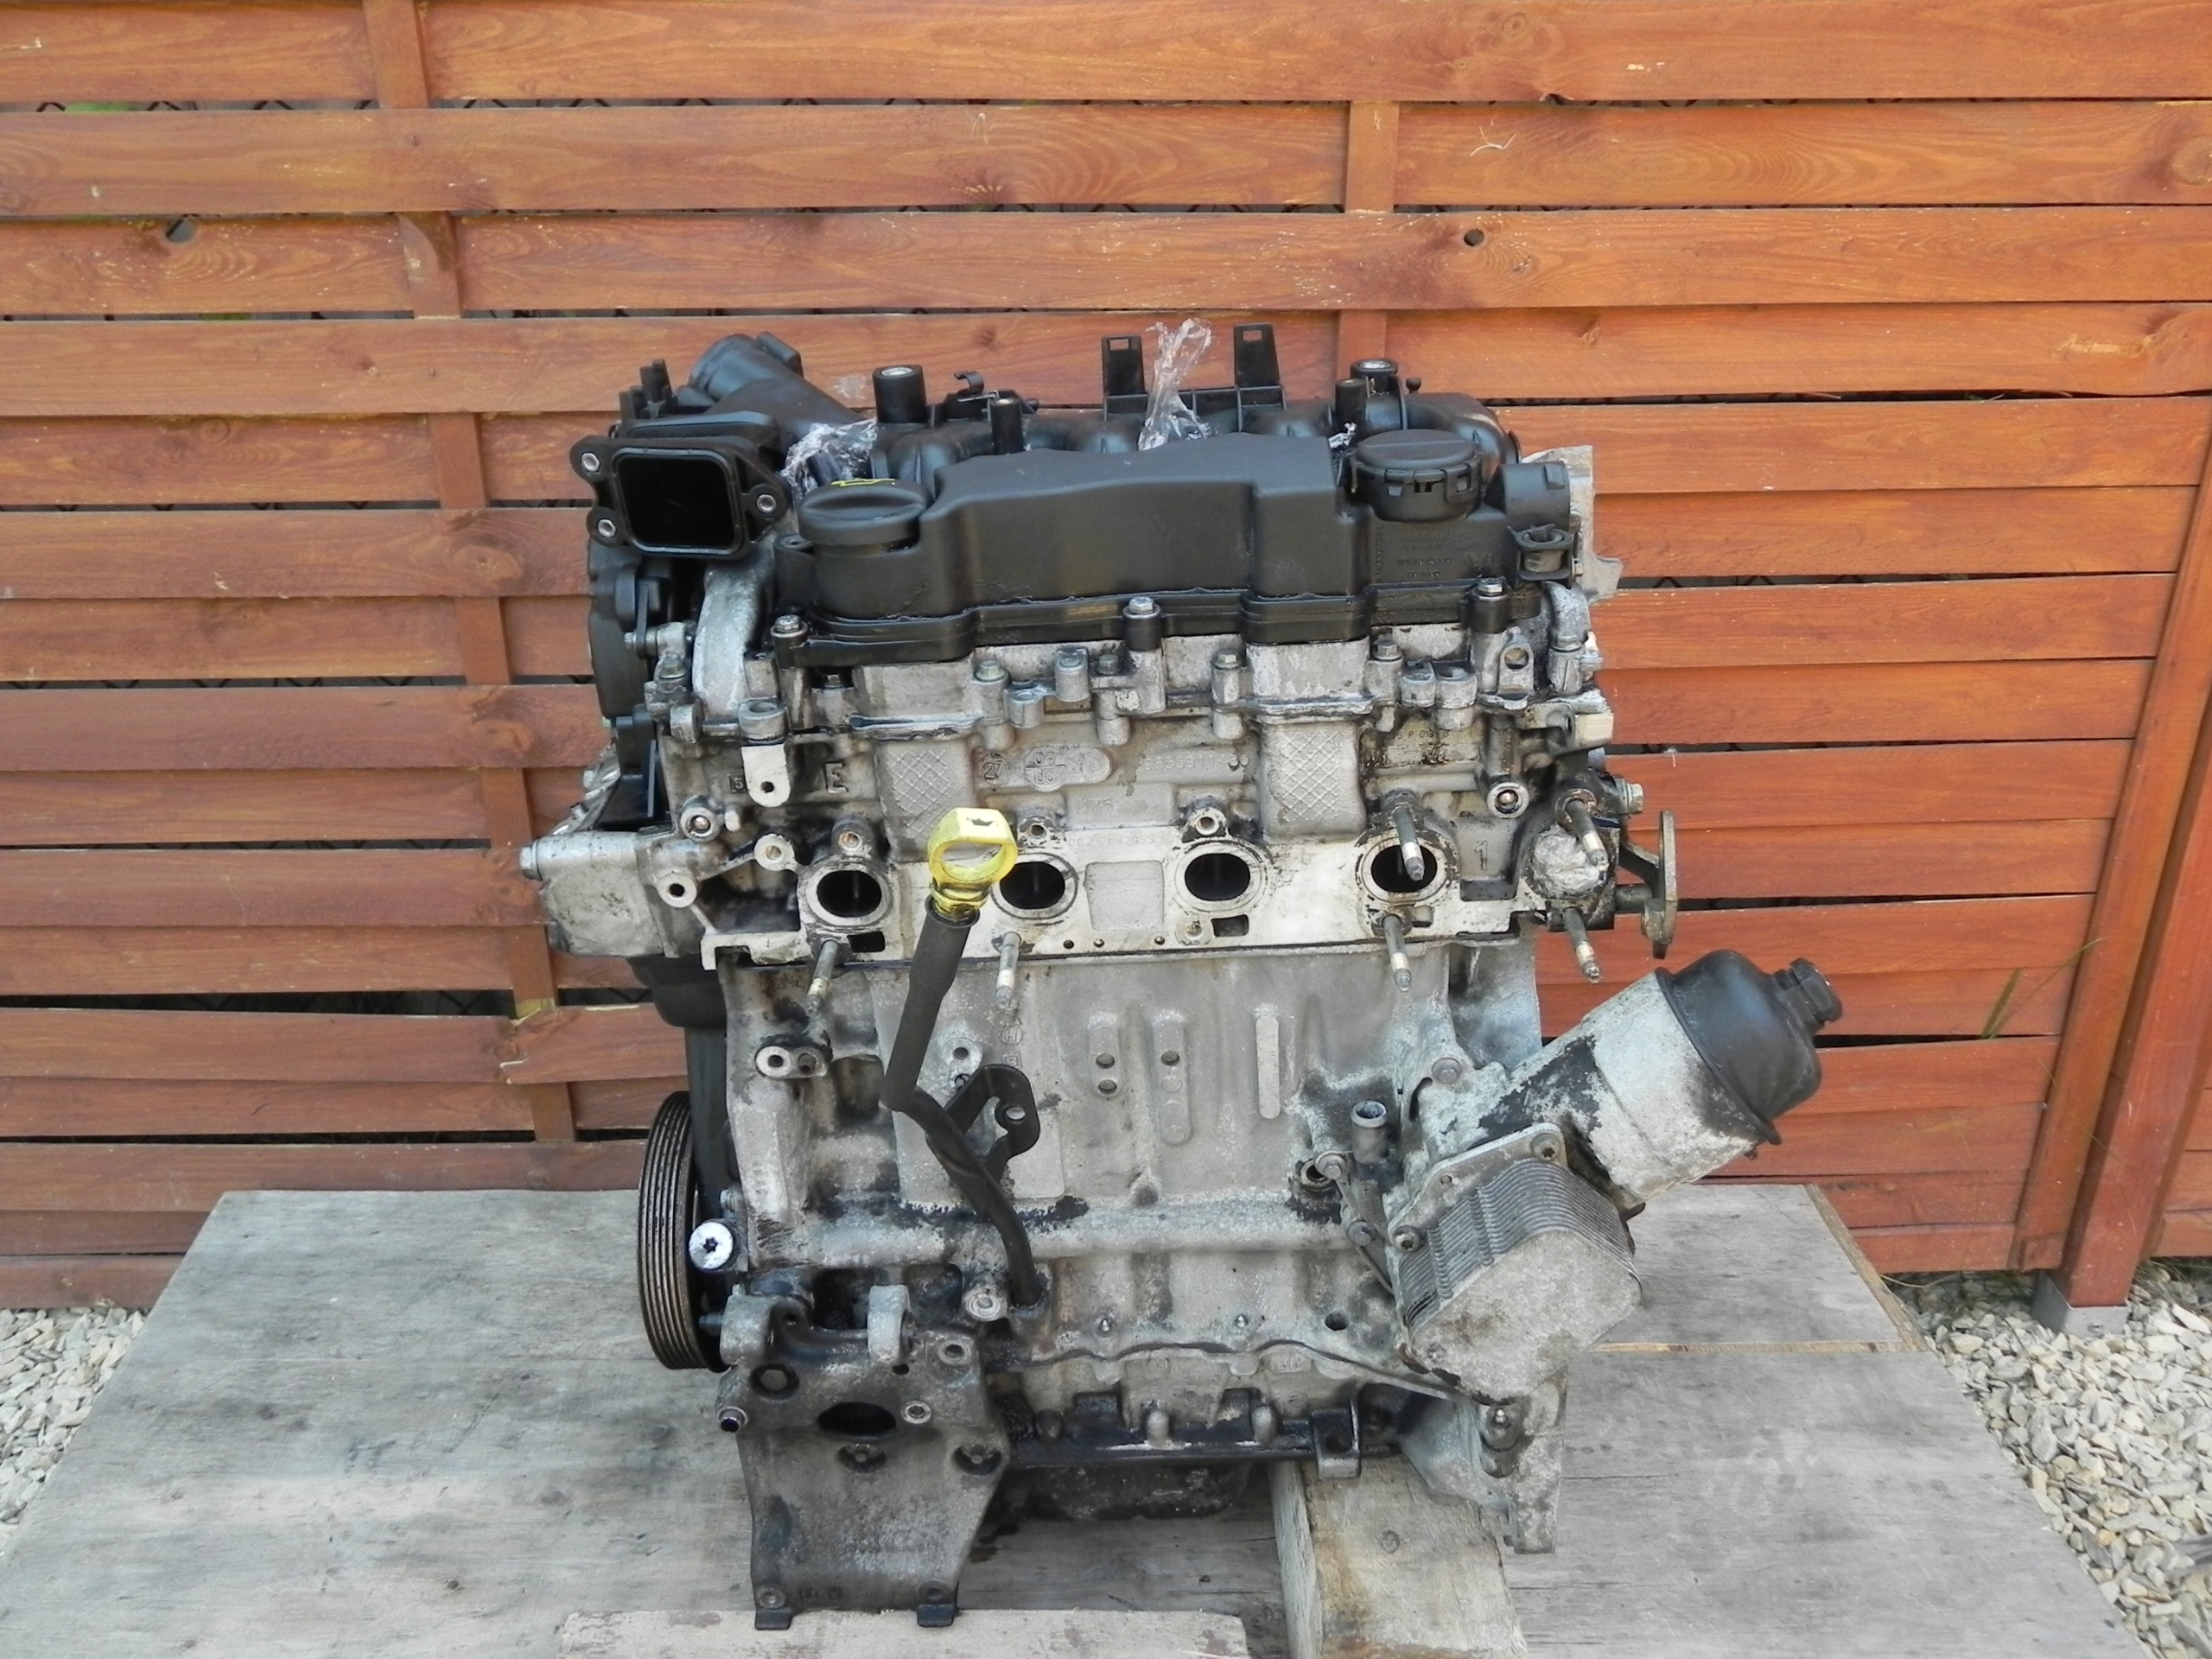 Купить двигатель ситроен 1.6. Двигатель Ситроен Берлинго 1.6 109 л.с. Kit 1.6 HDI 9hz (dv6ted4). Двигатель Ситроен дв 6 АТ 4. М 207 двигатель.